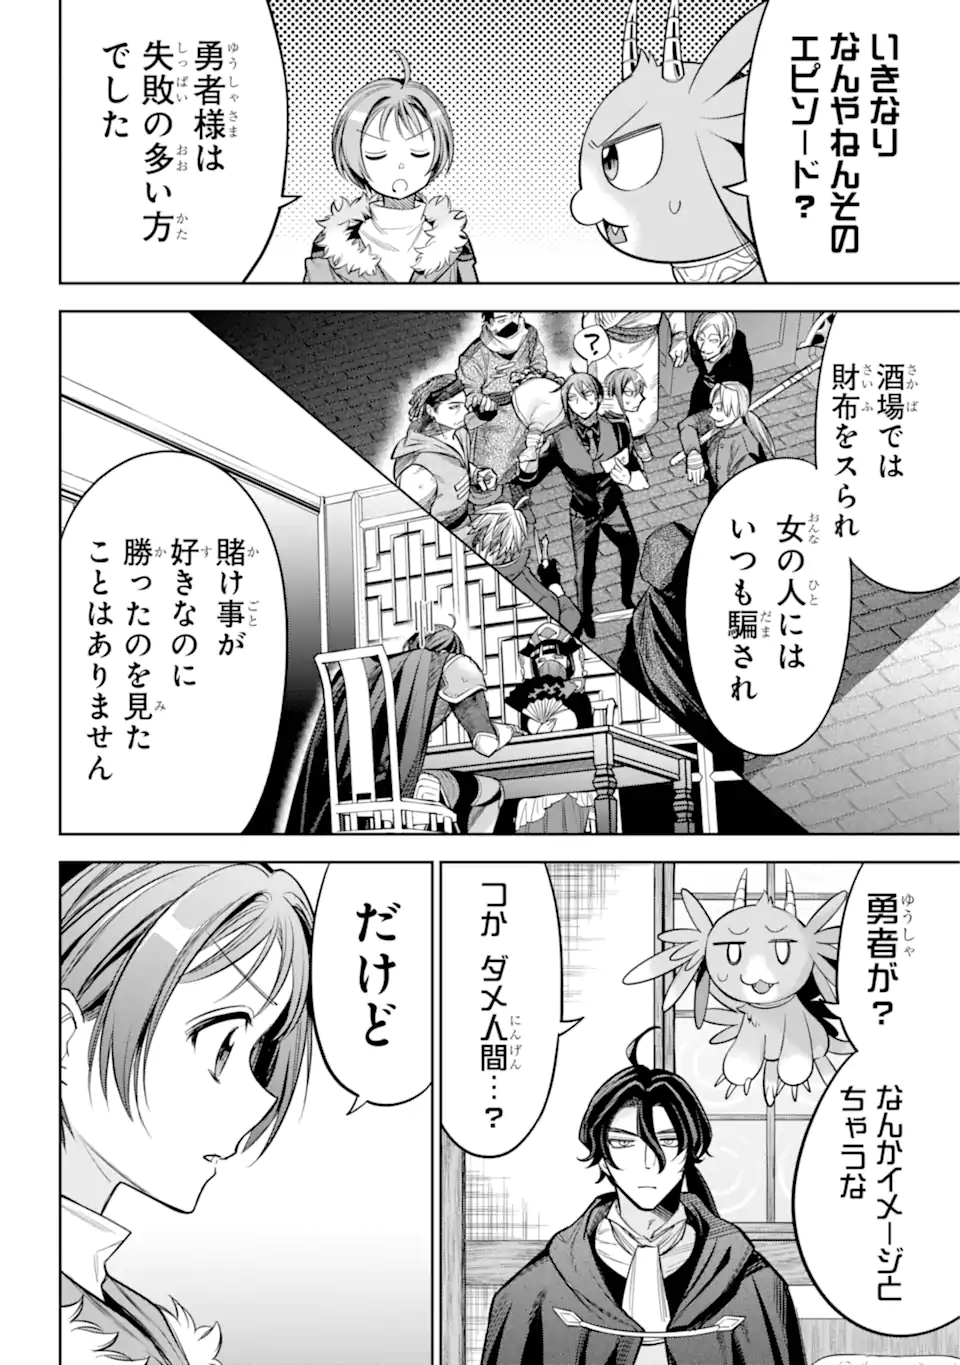 Yuusha Party no Nimotsu Mochi - Chapter 15.3 - Page 2